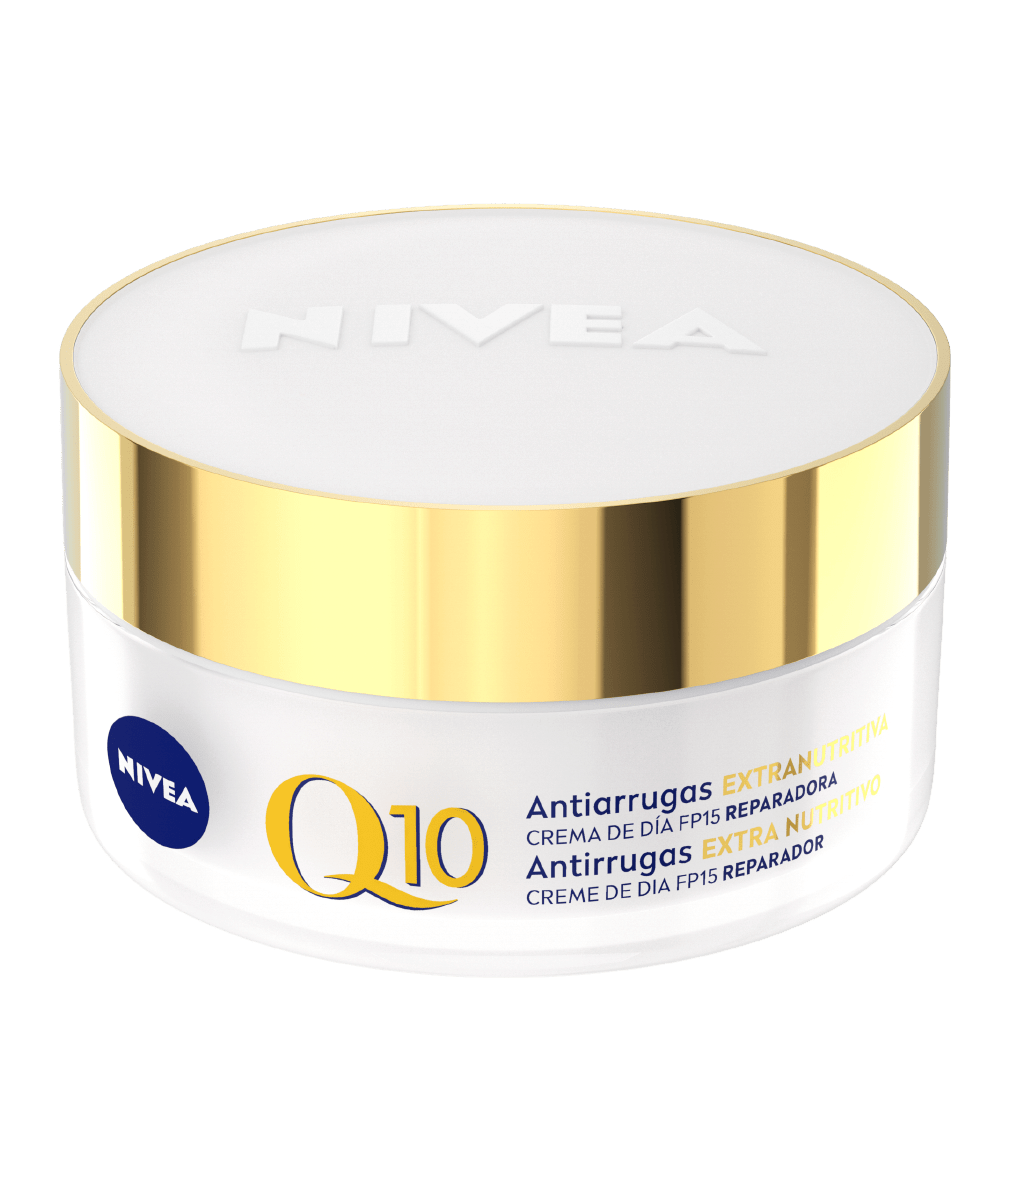 Q10 ANTIARRUGAS EXTRANUTRITIVA Crema de Día Reparadora FP15 | NIVEA